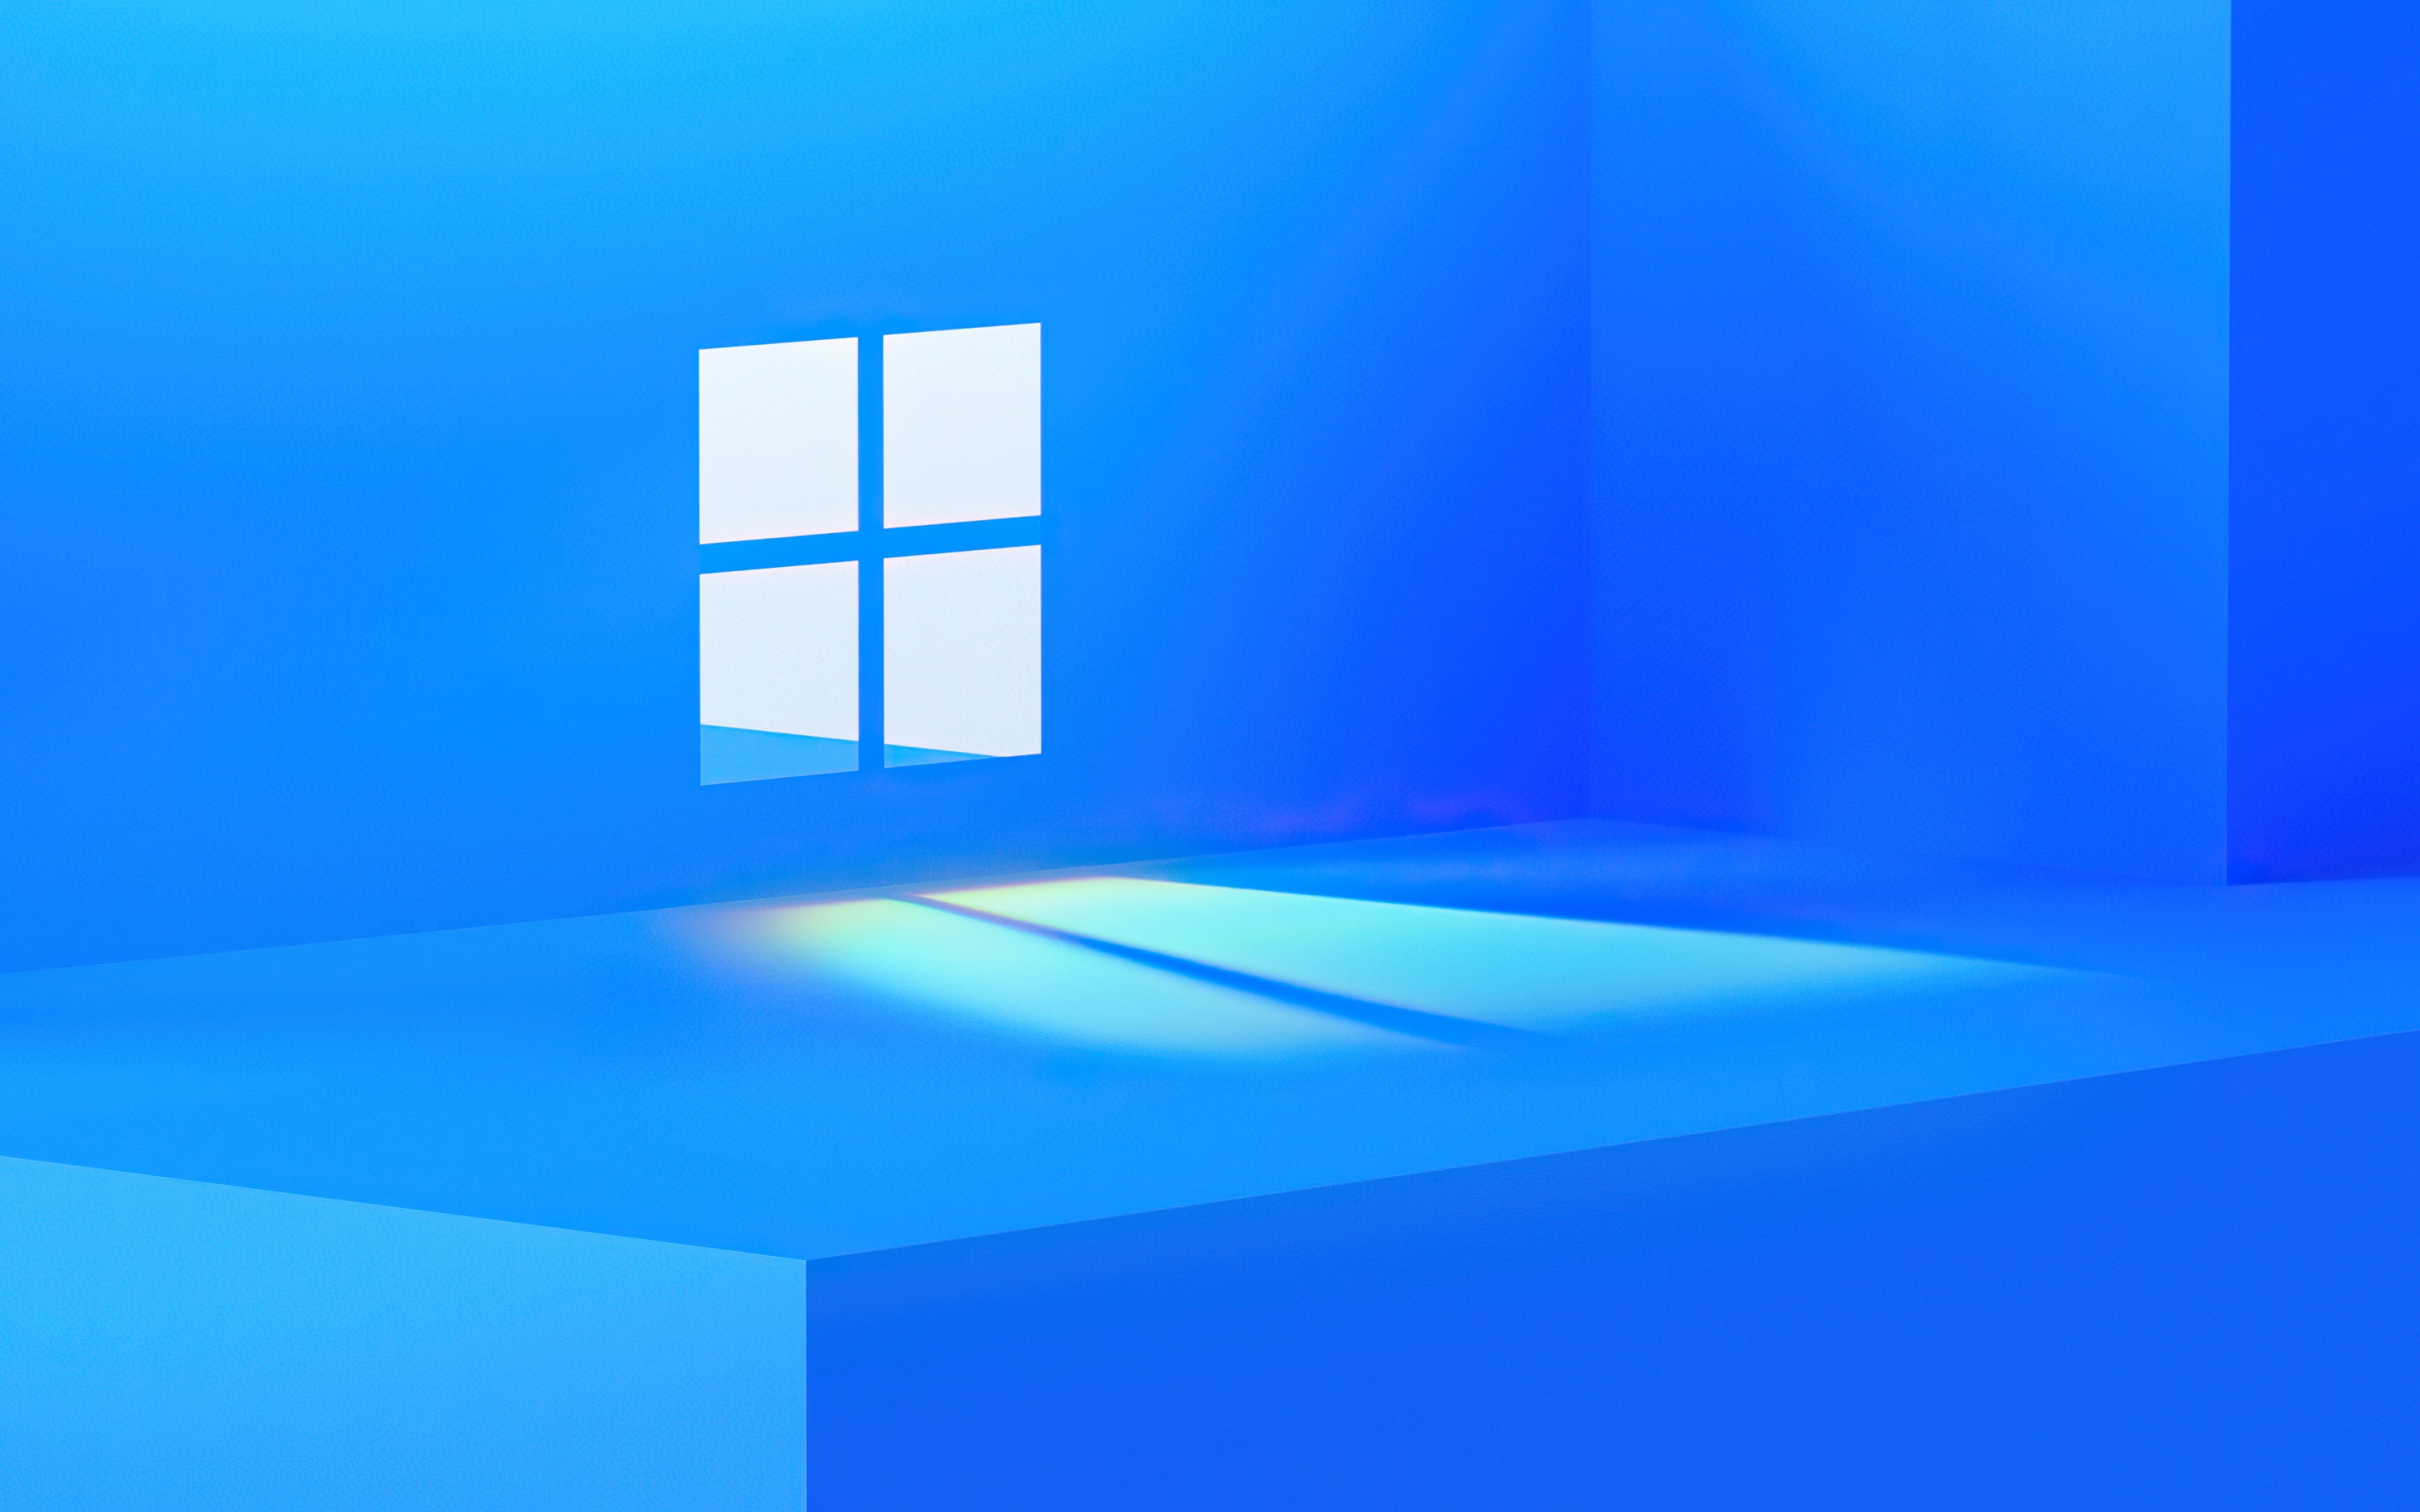 Windows 11 Wallpaper 4K, Stock, Official, Blue background, Windows logo